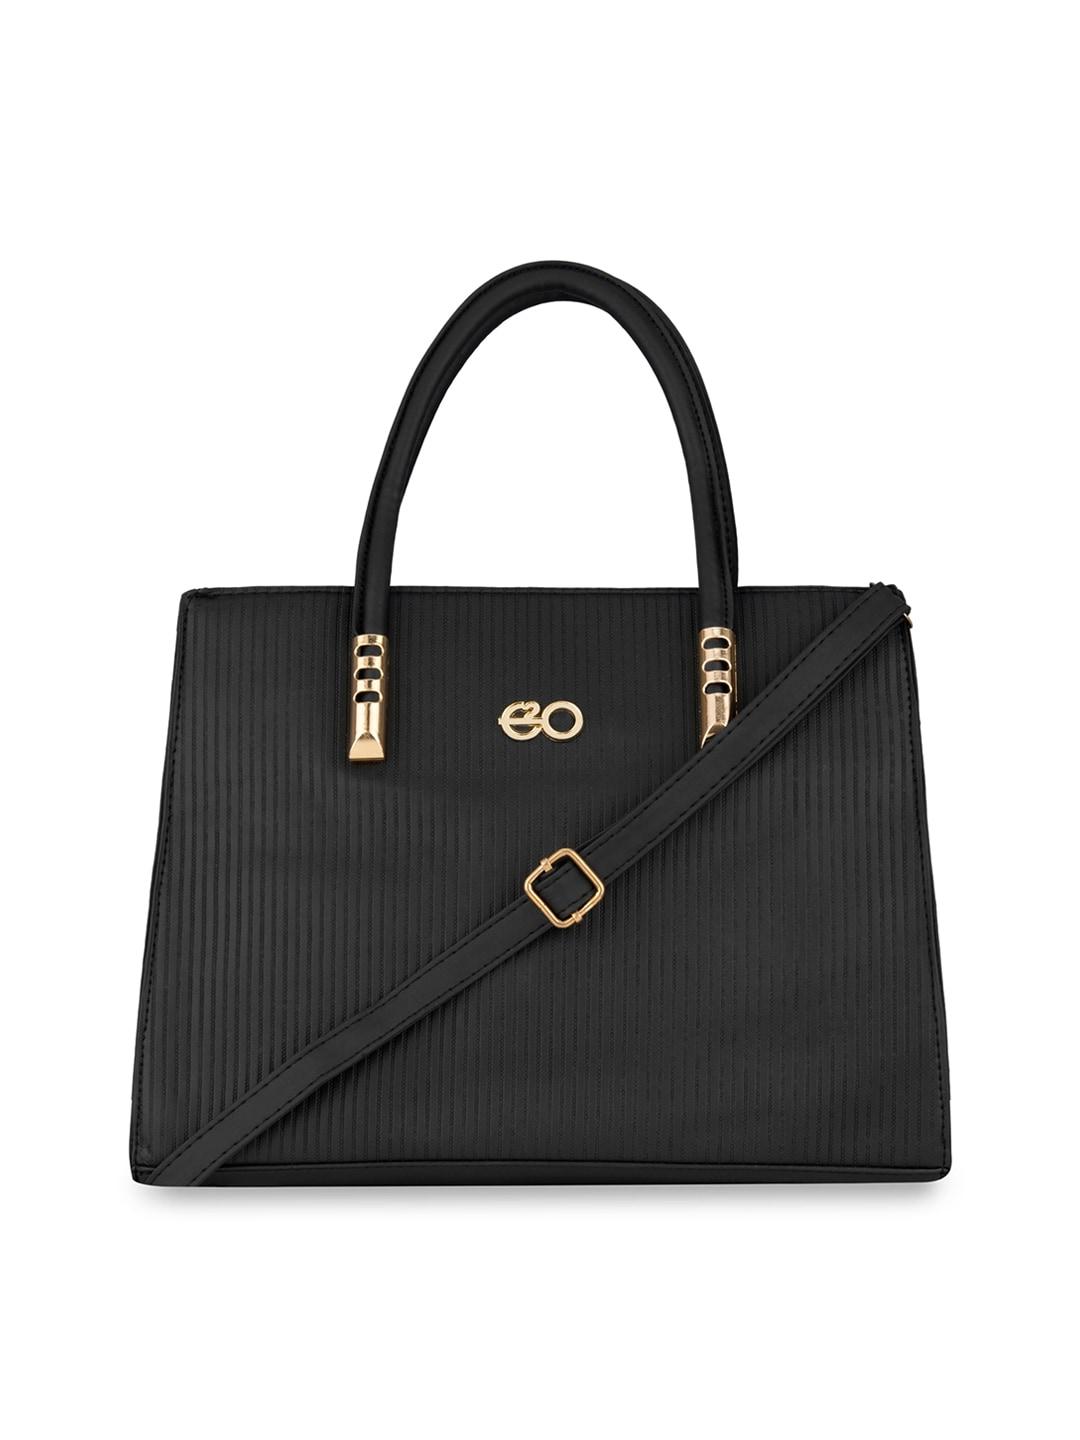 E2O Textured PU Structured Handheld Bag